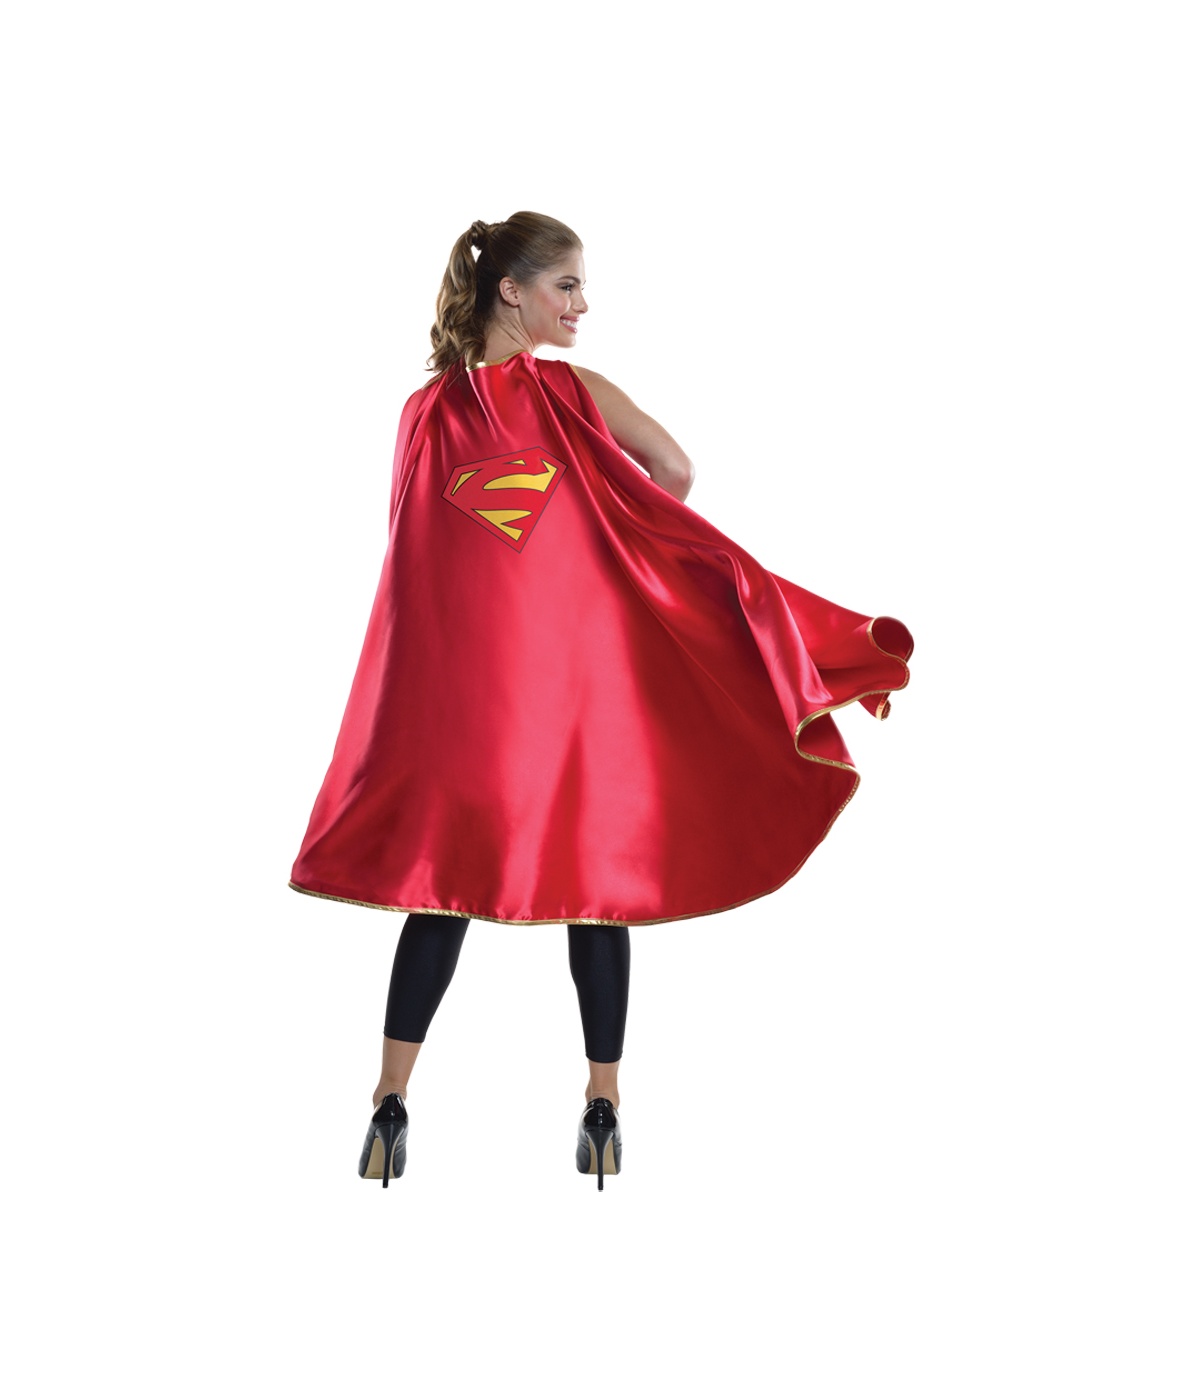  Womens Supergirl Costume Cape